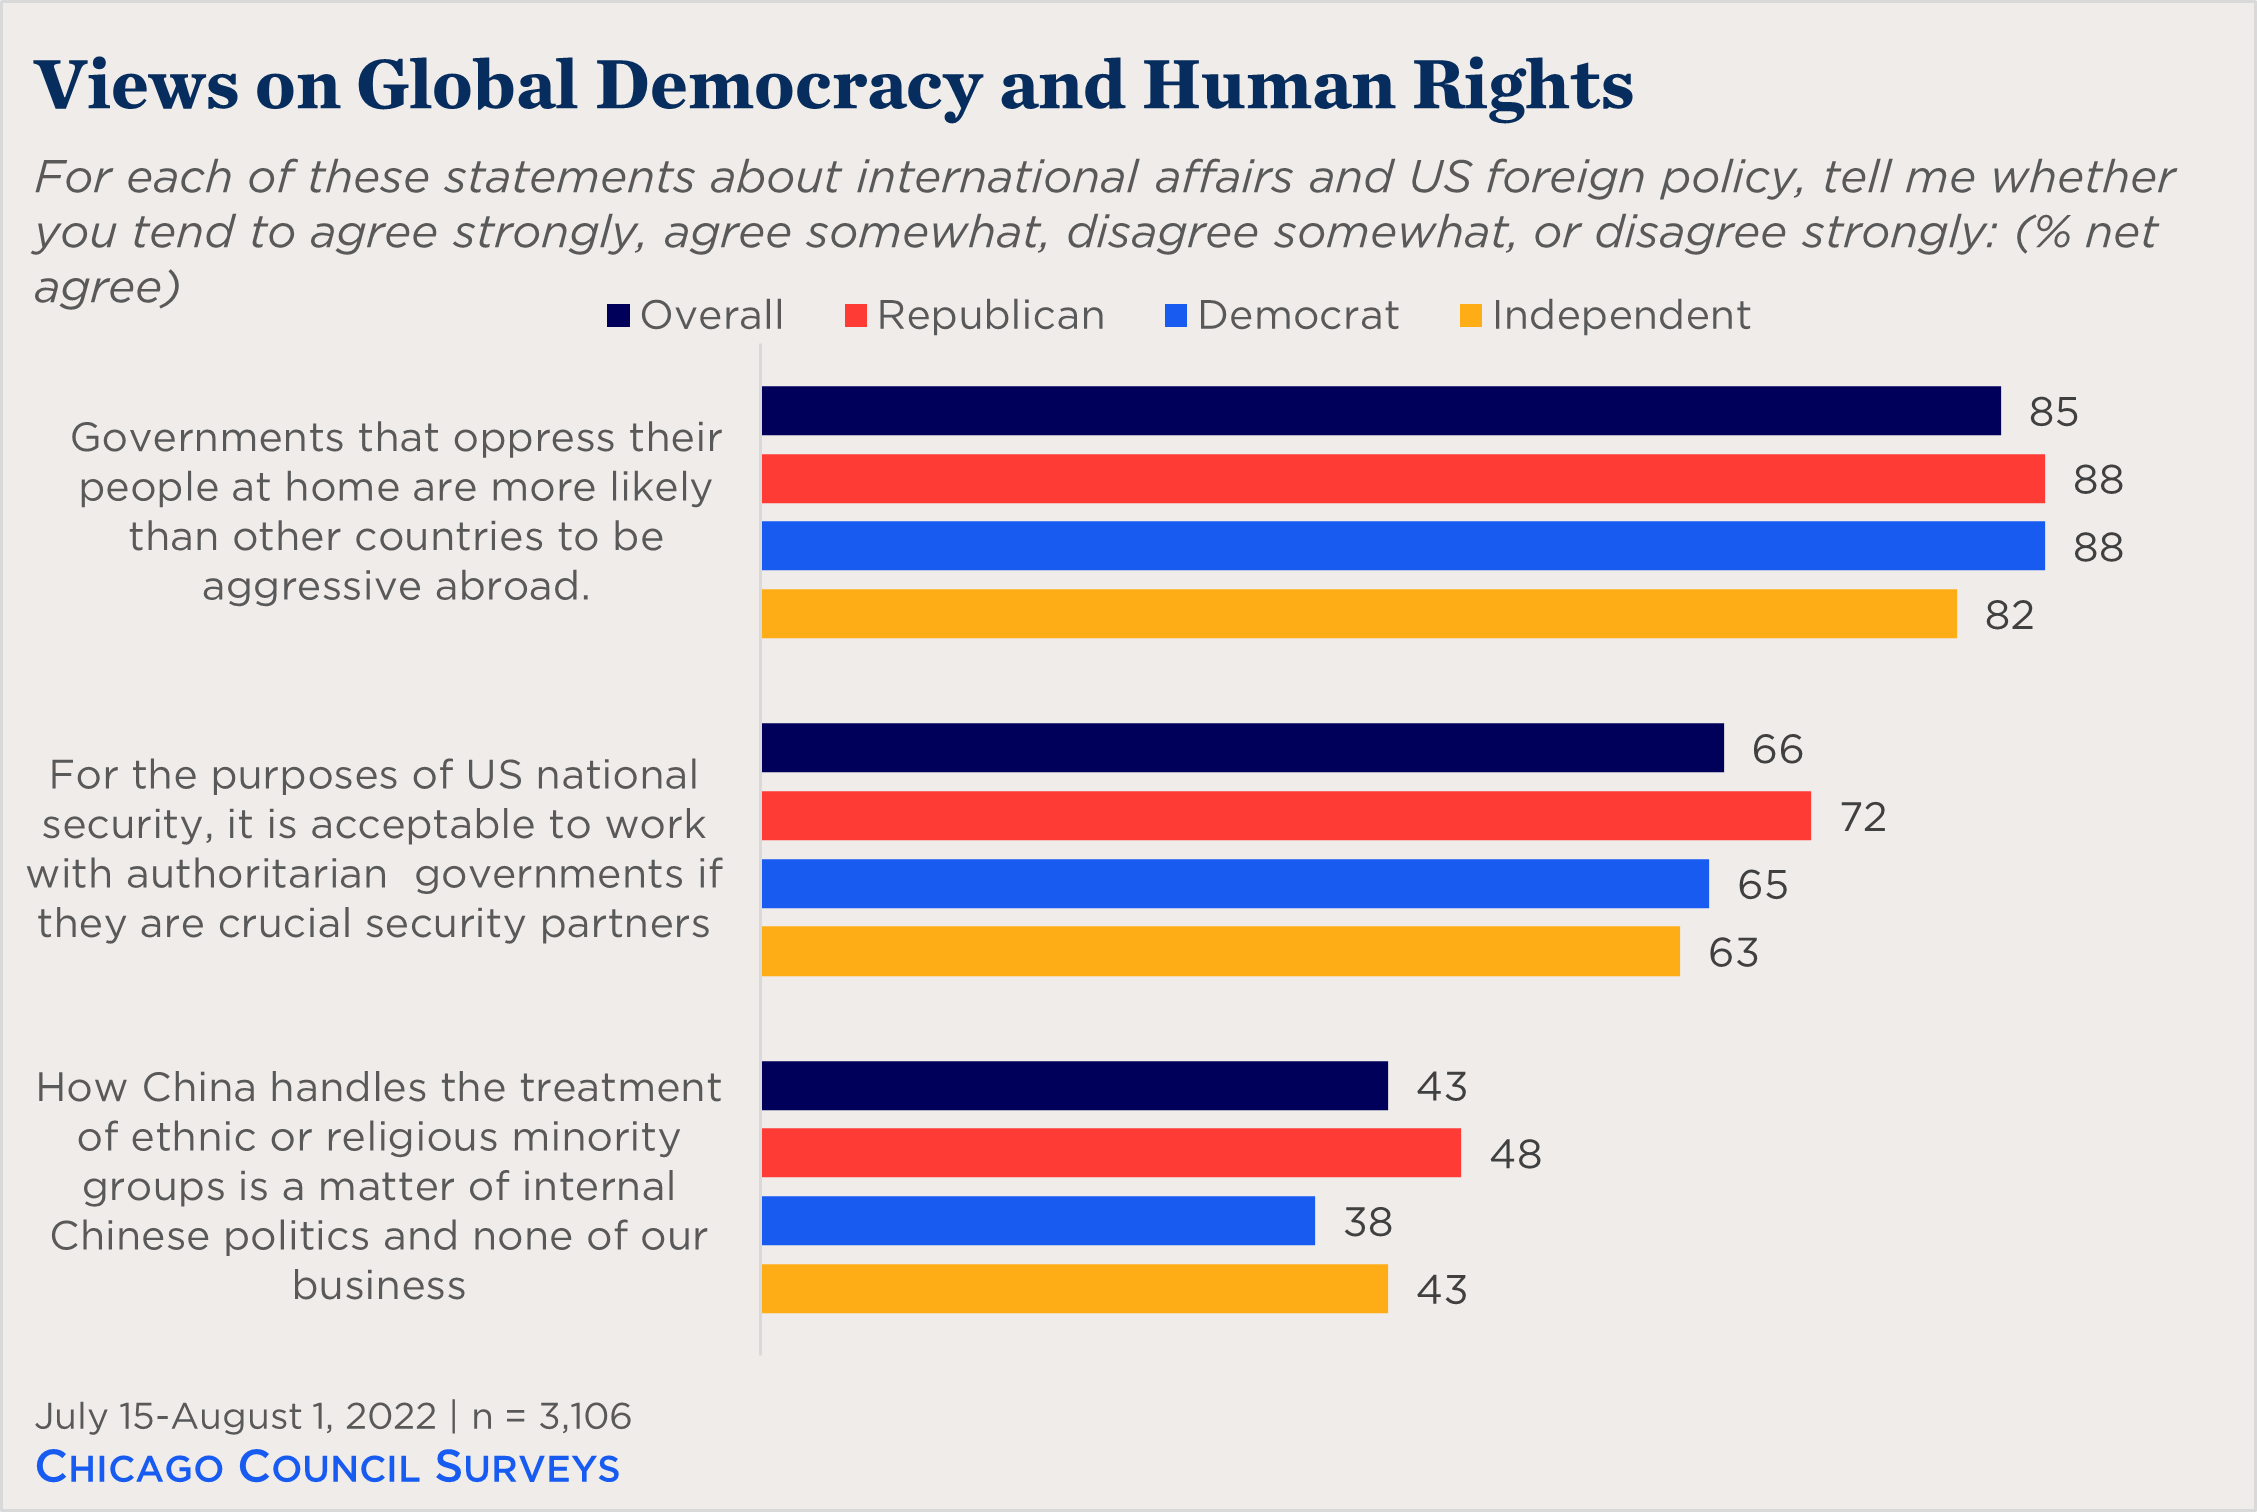 bar chart showing partisan views of global democracy and human rights